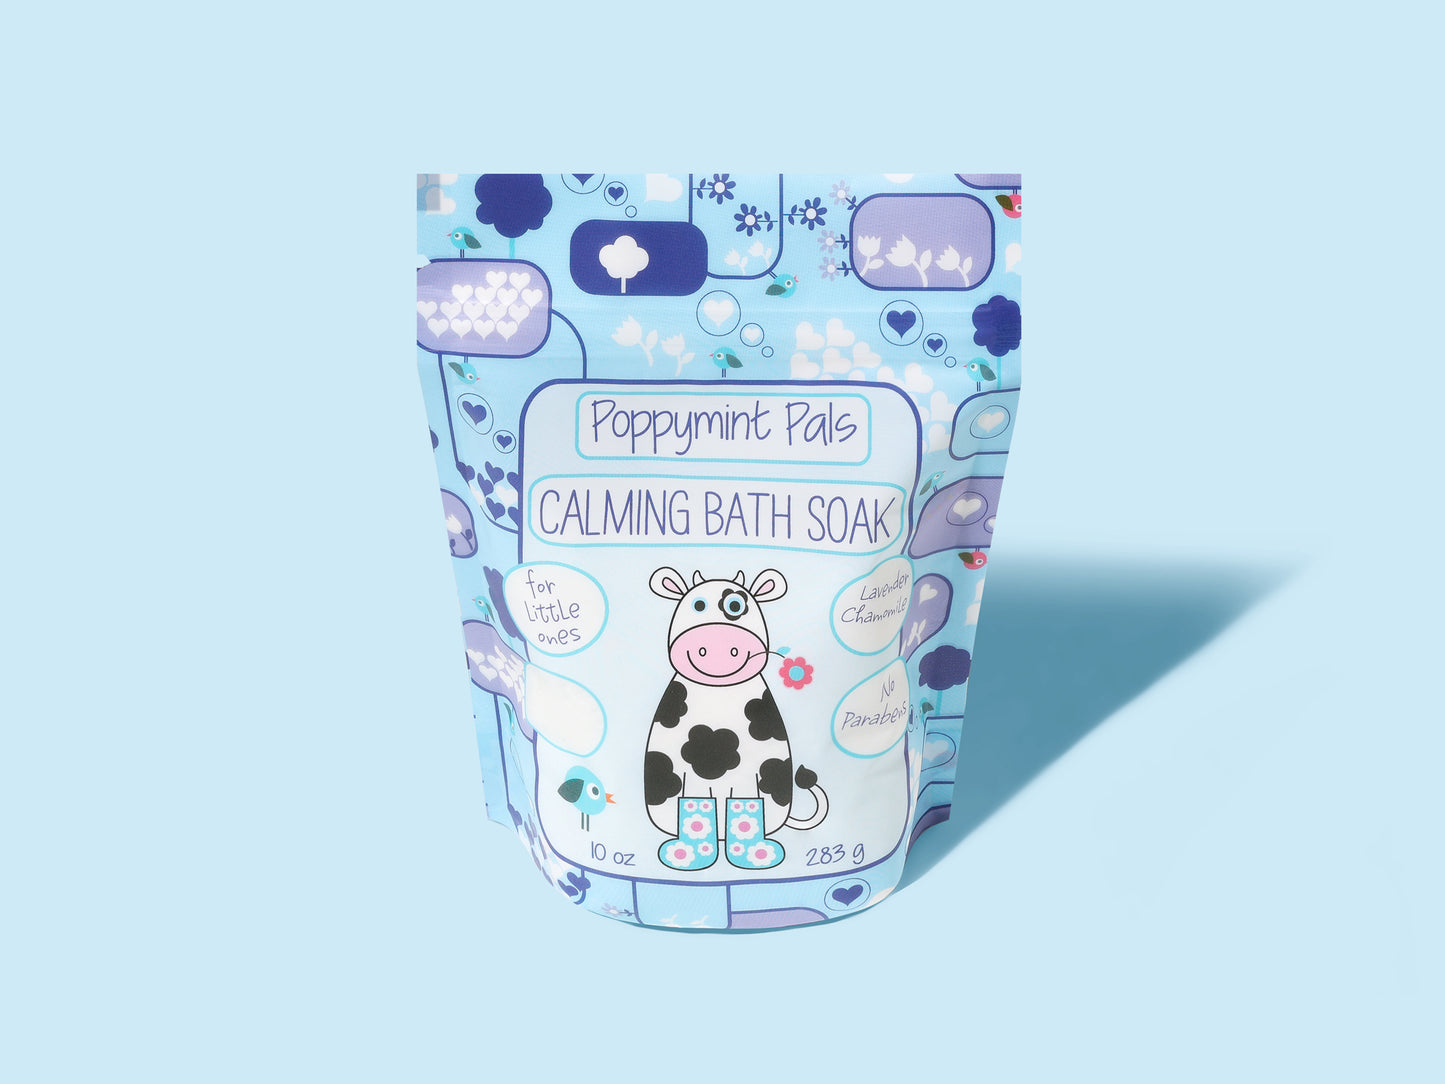 Cheerful Bath Soak